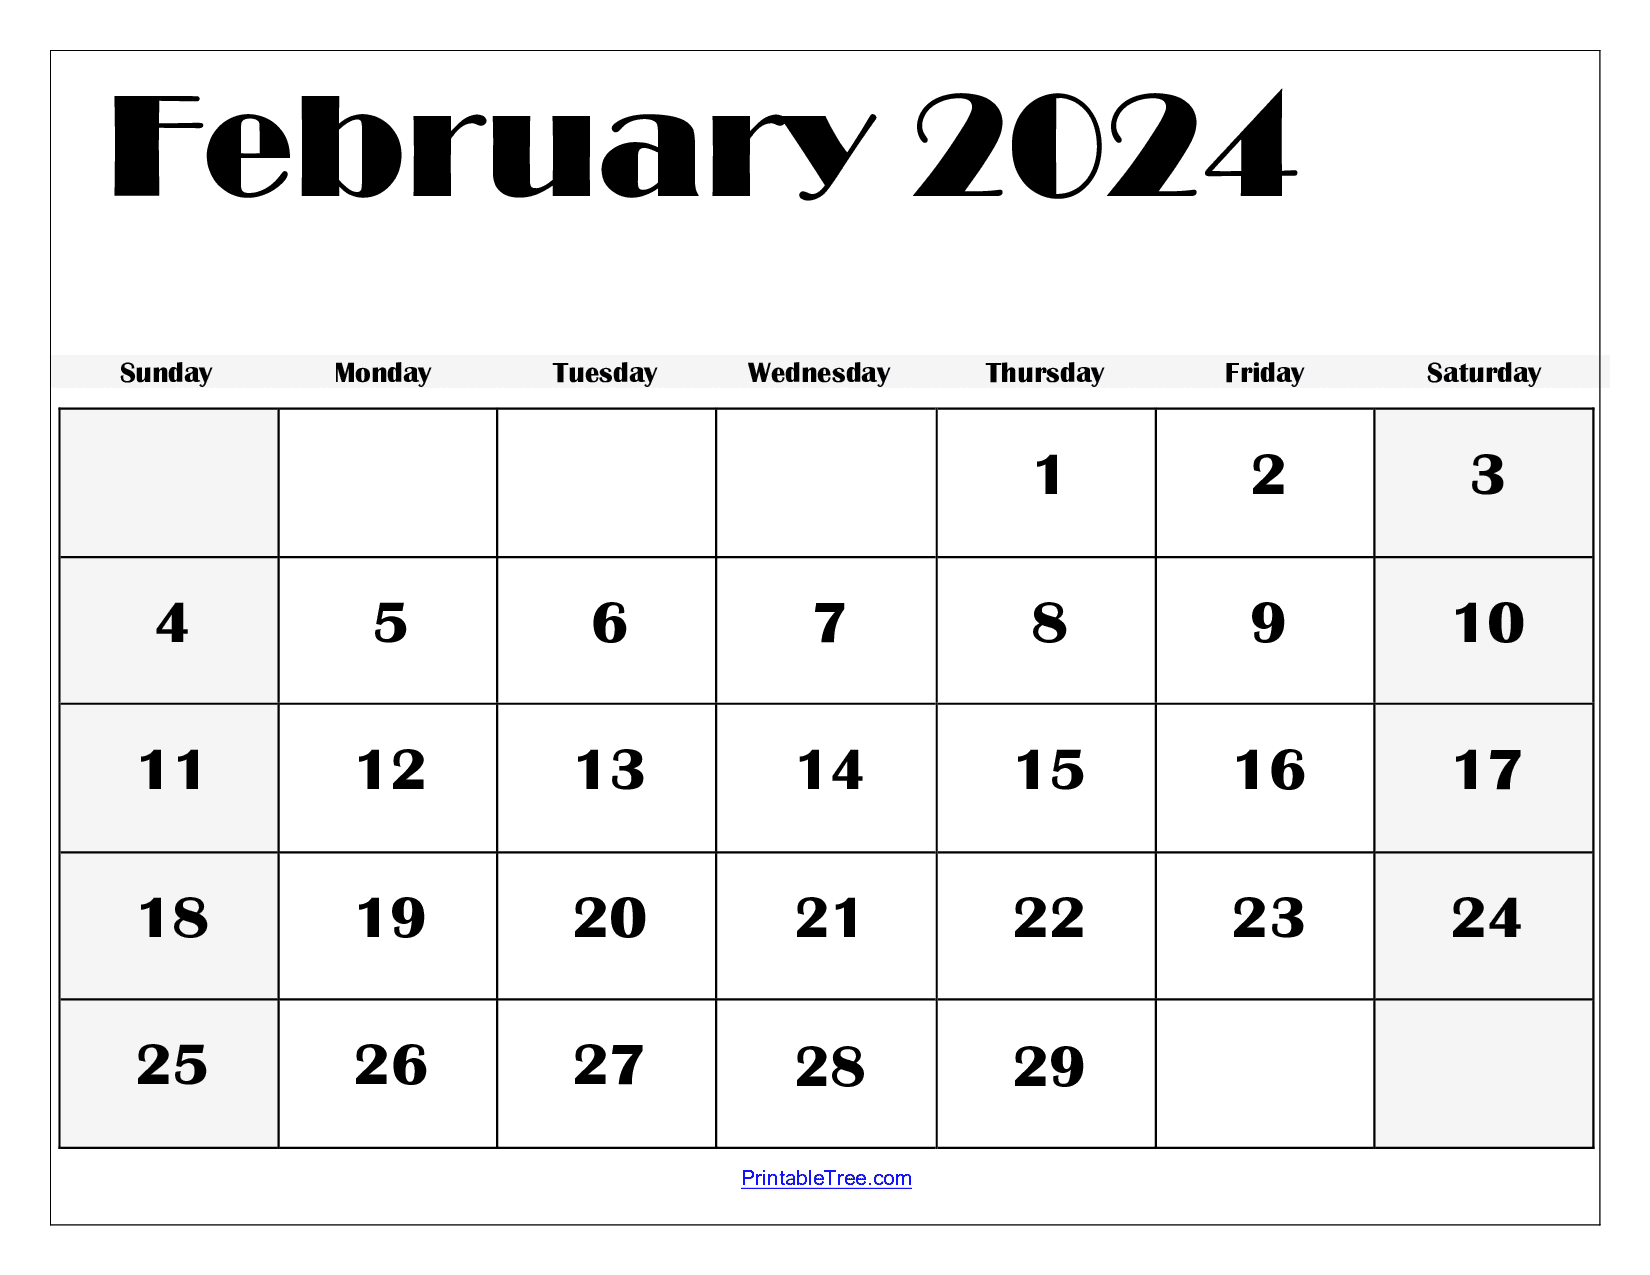 February 2024 Calendar Printable Pdf Template With Holidays for A-Printable-Calendar February 2024